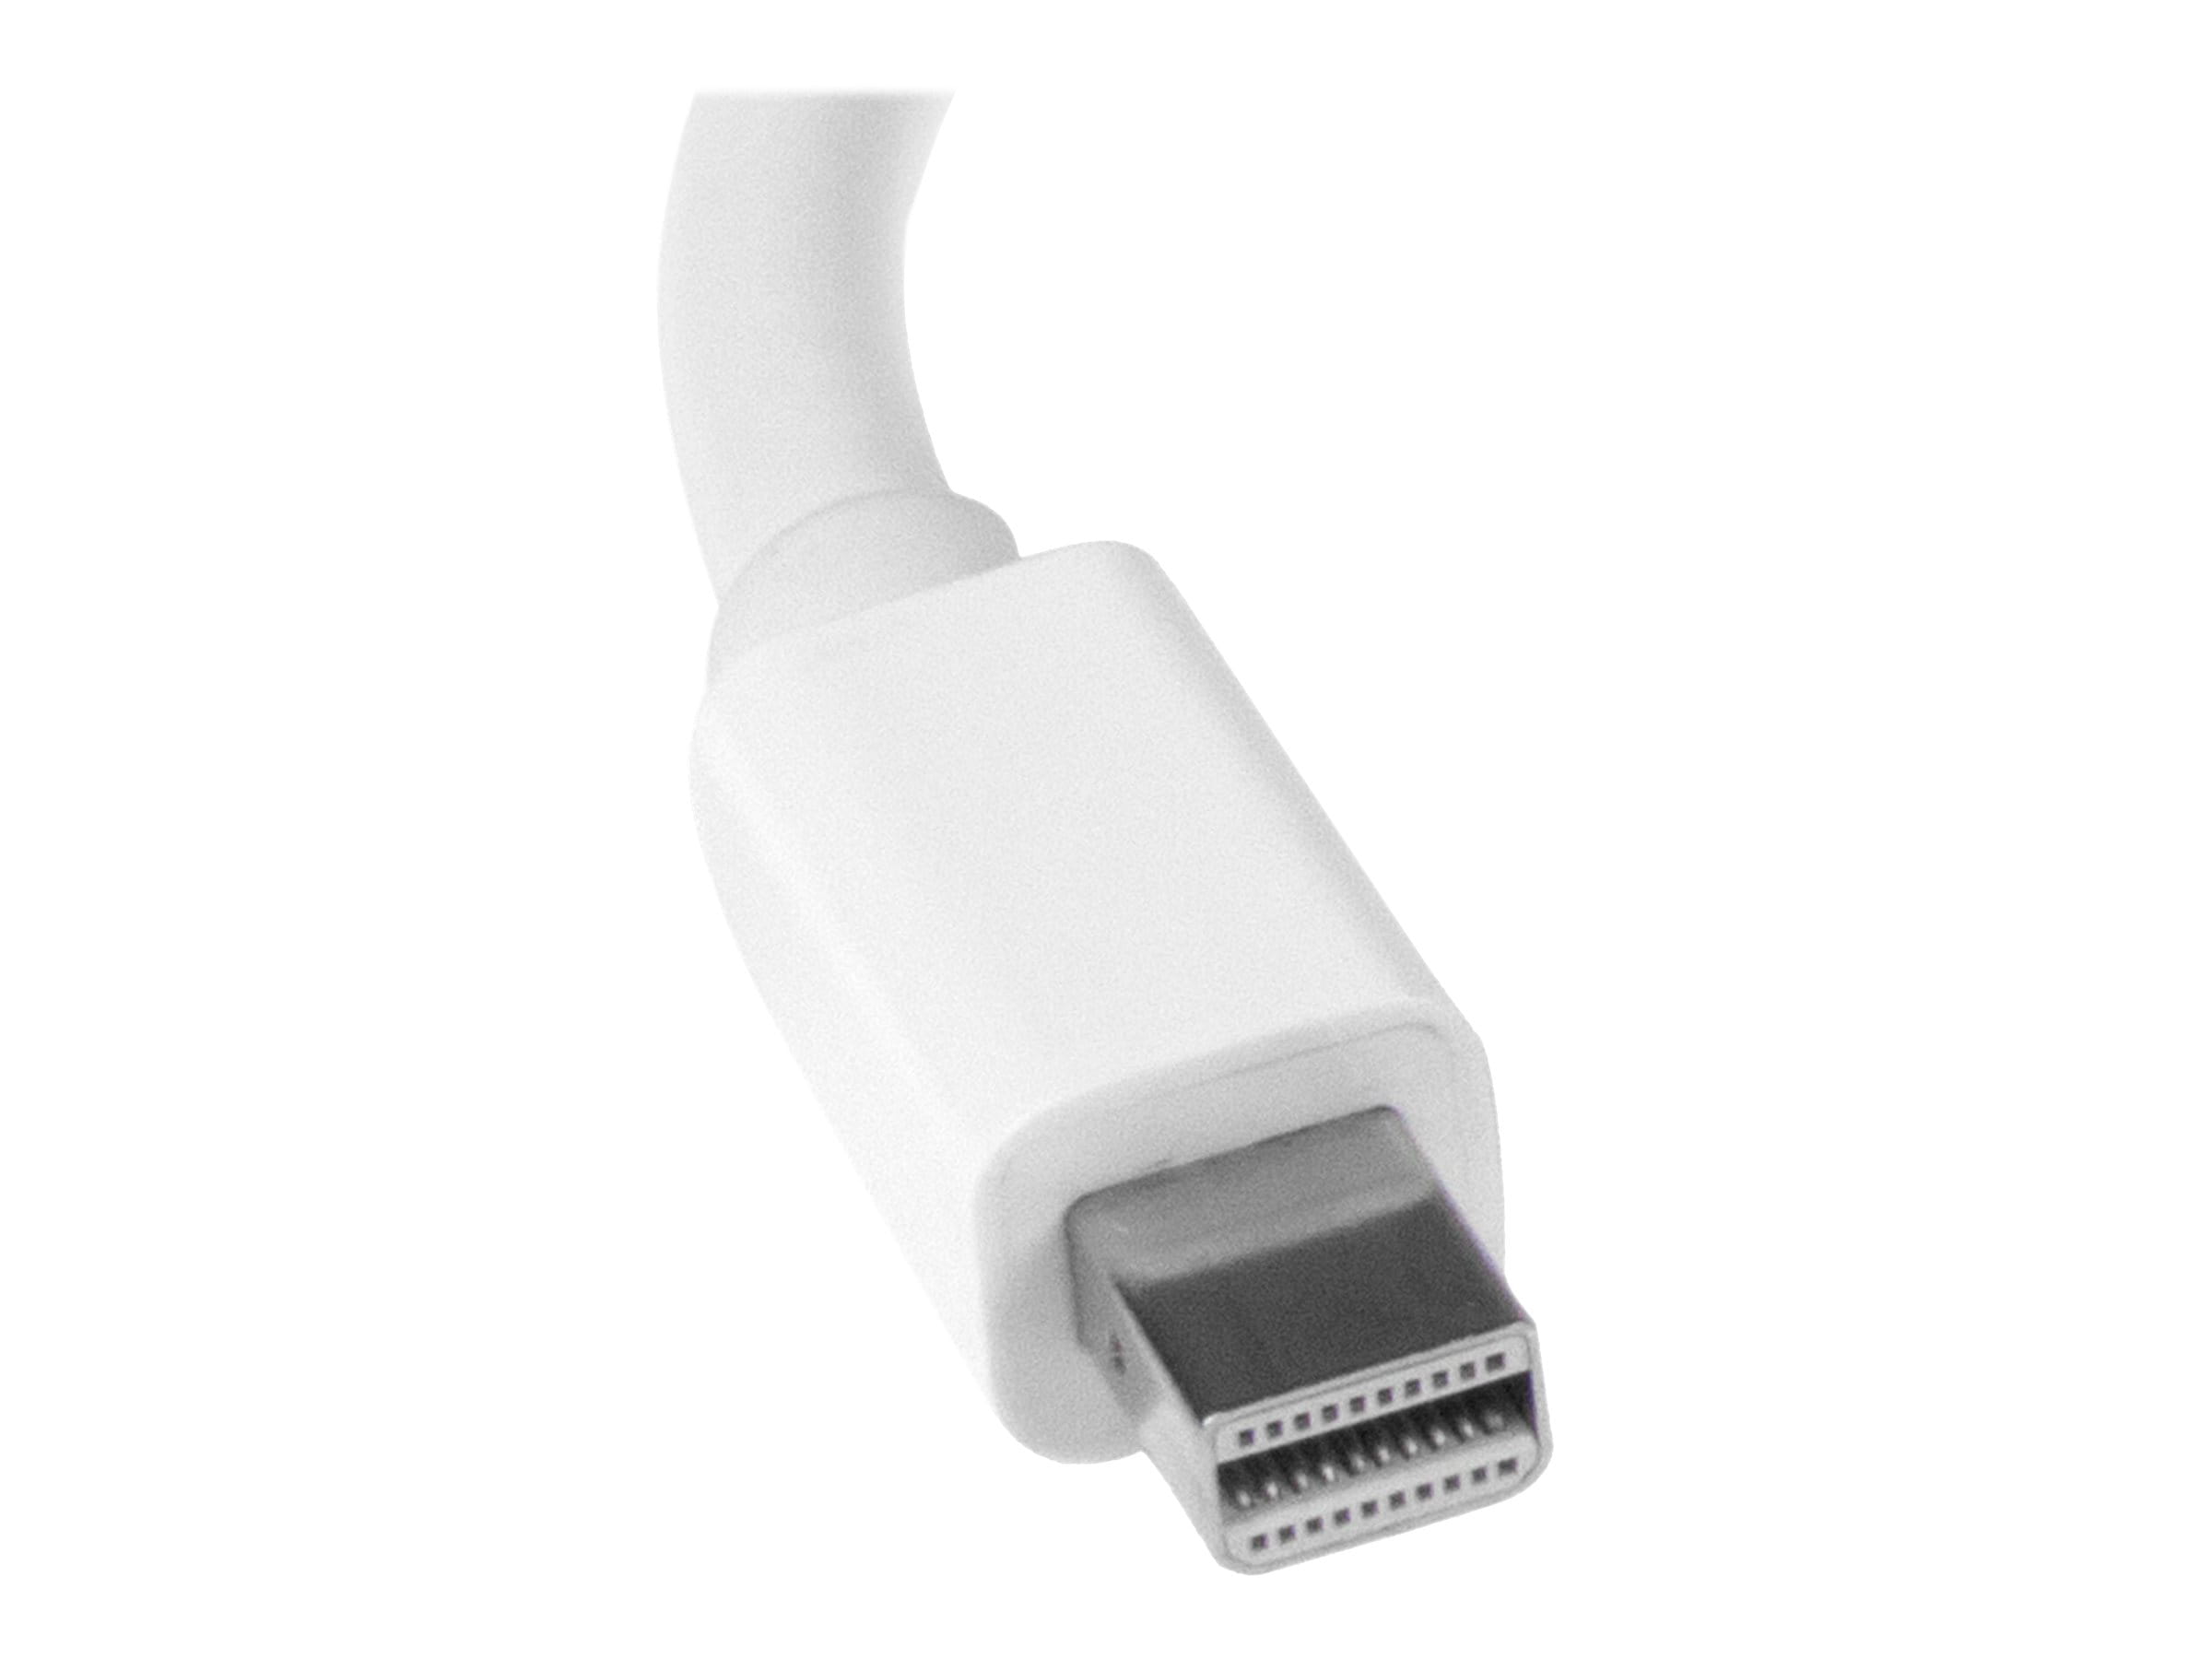 StarTech.com Reise A/V Adapter: 2-in-1 Mini DisplayPort auf HDMI oder VGA Konverter